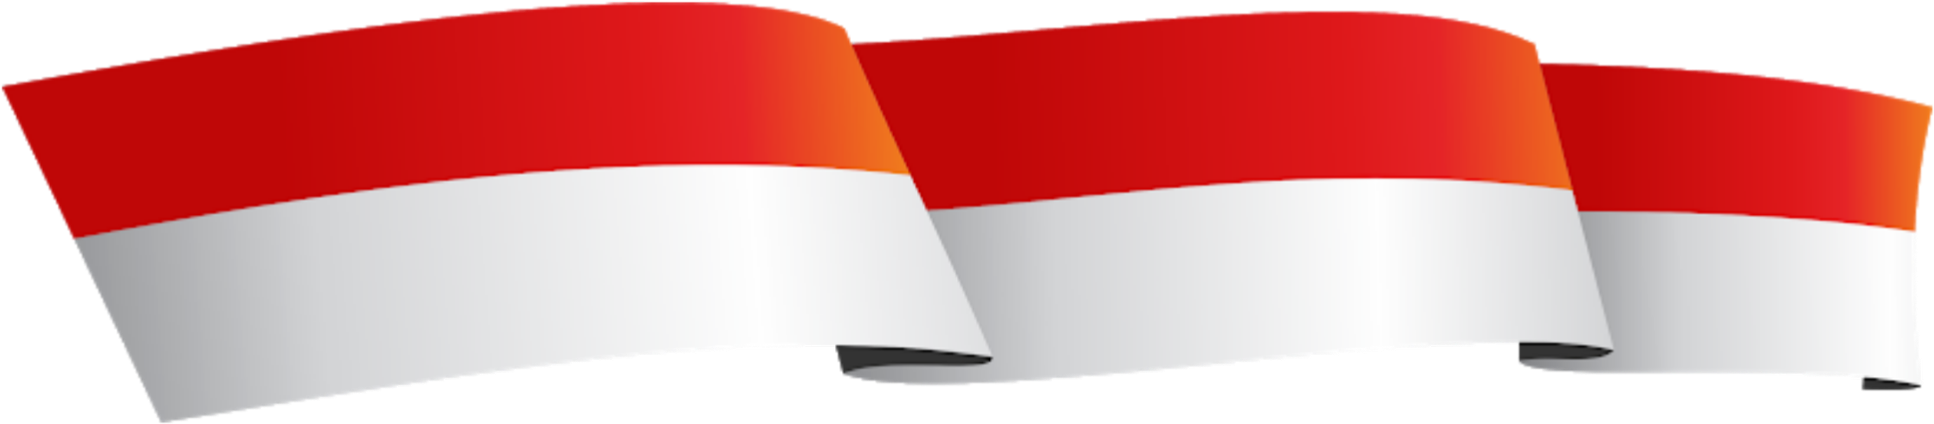 Bendera Indonesia Png : Pita Bendera Indonesia Bendera Merah Putih Png